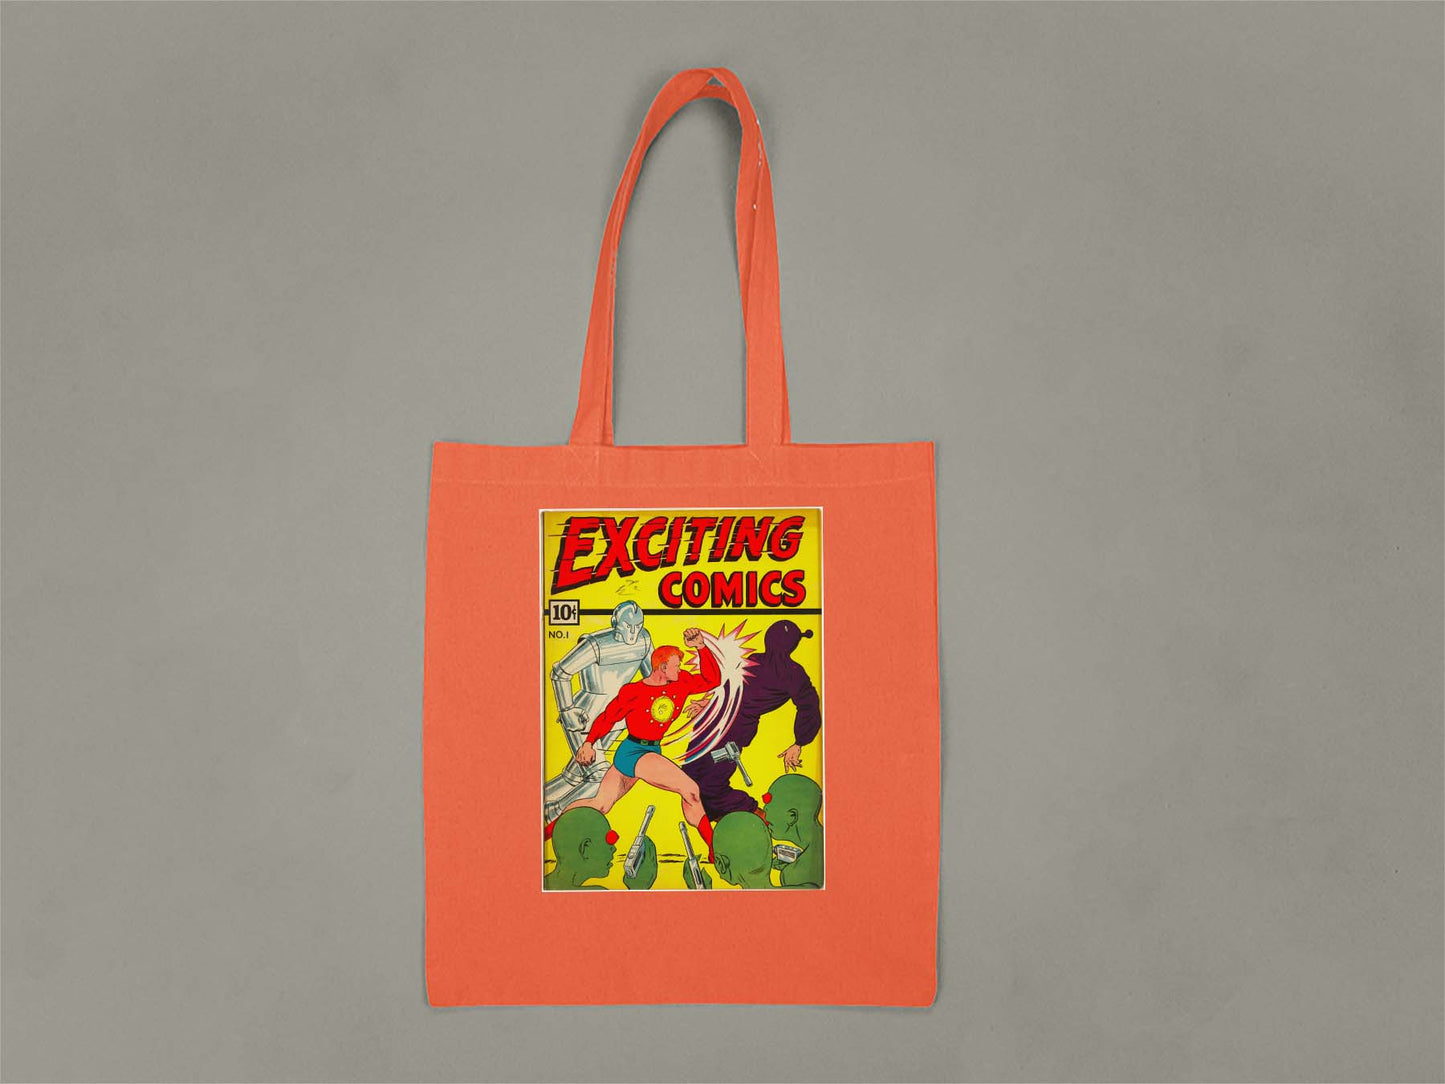 Exciting Comics No.1 Tote Bag  Orange